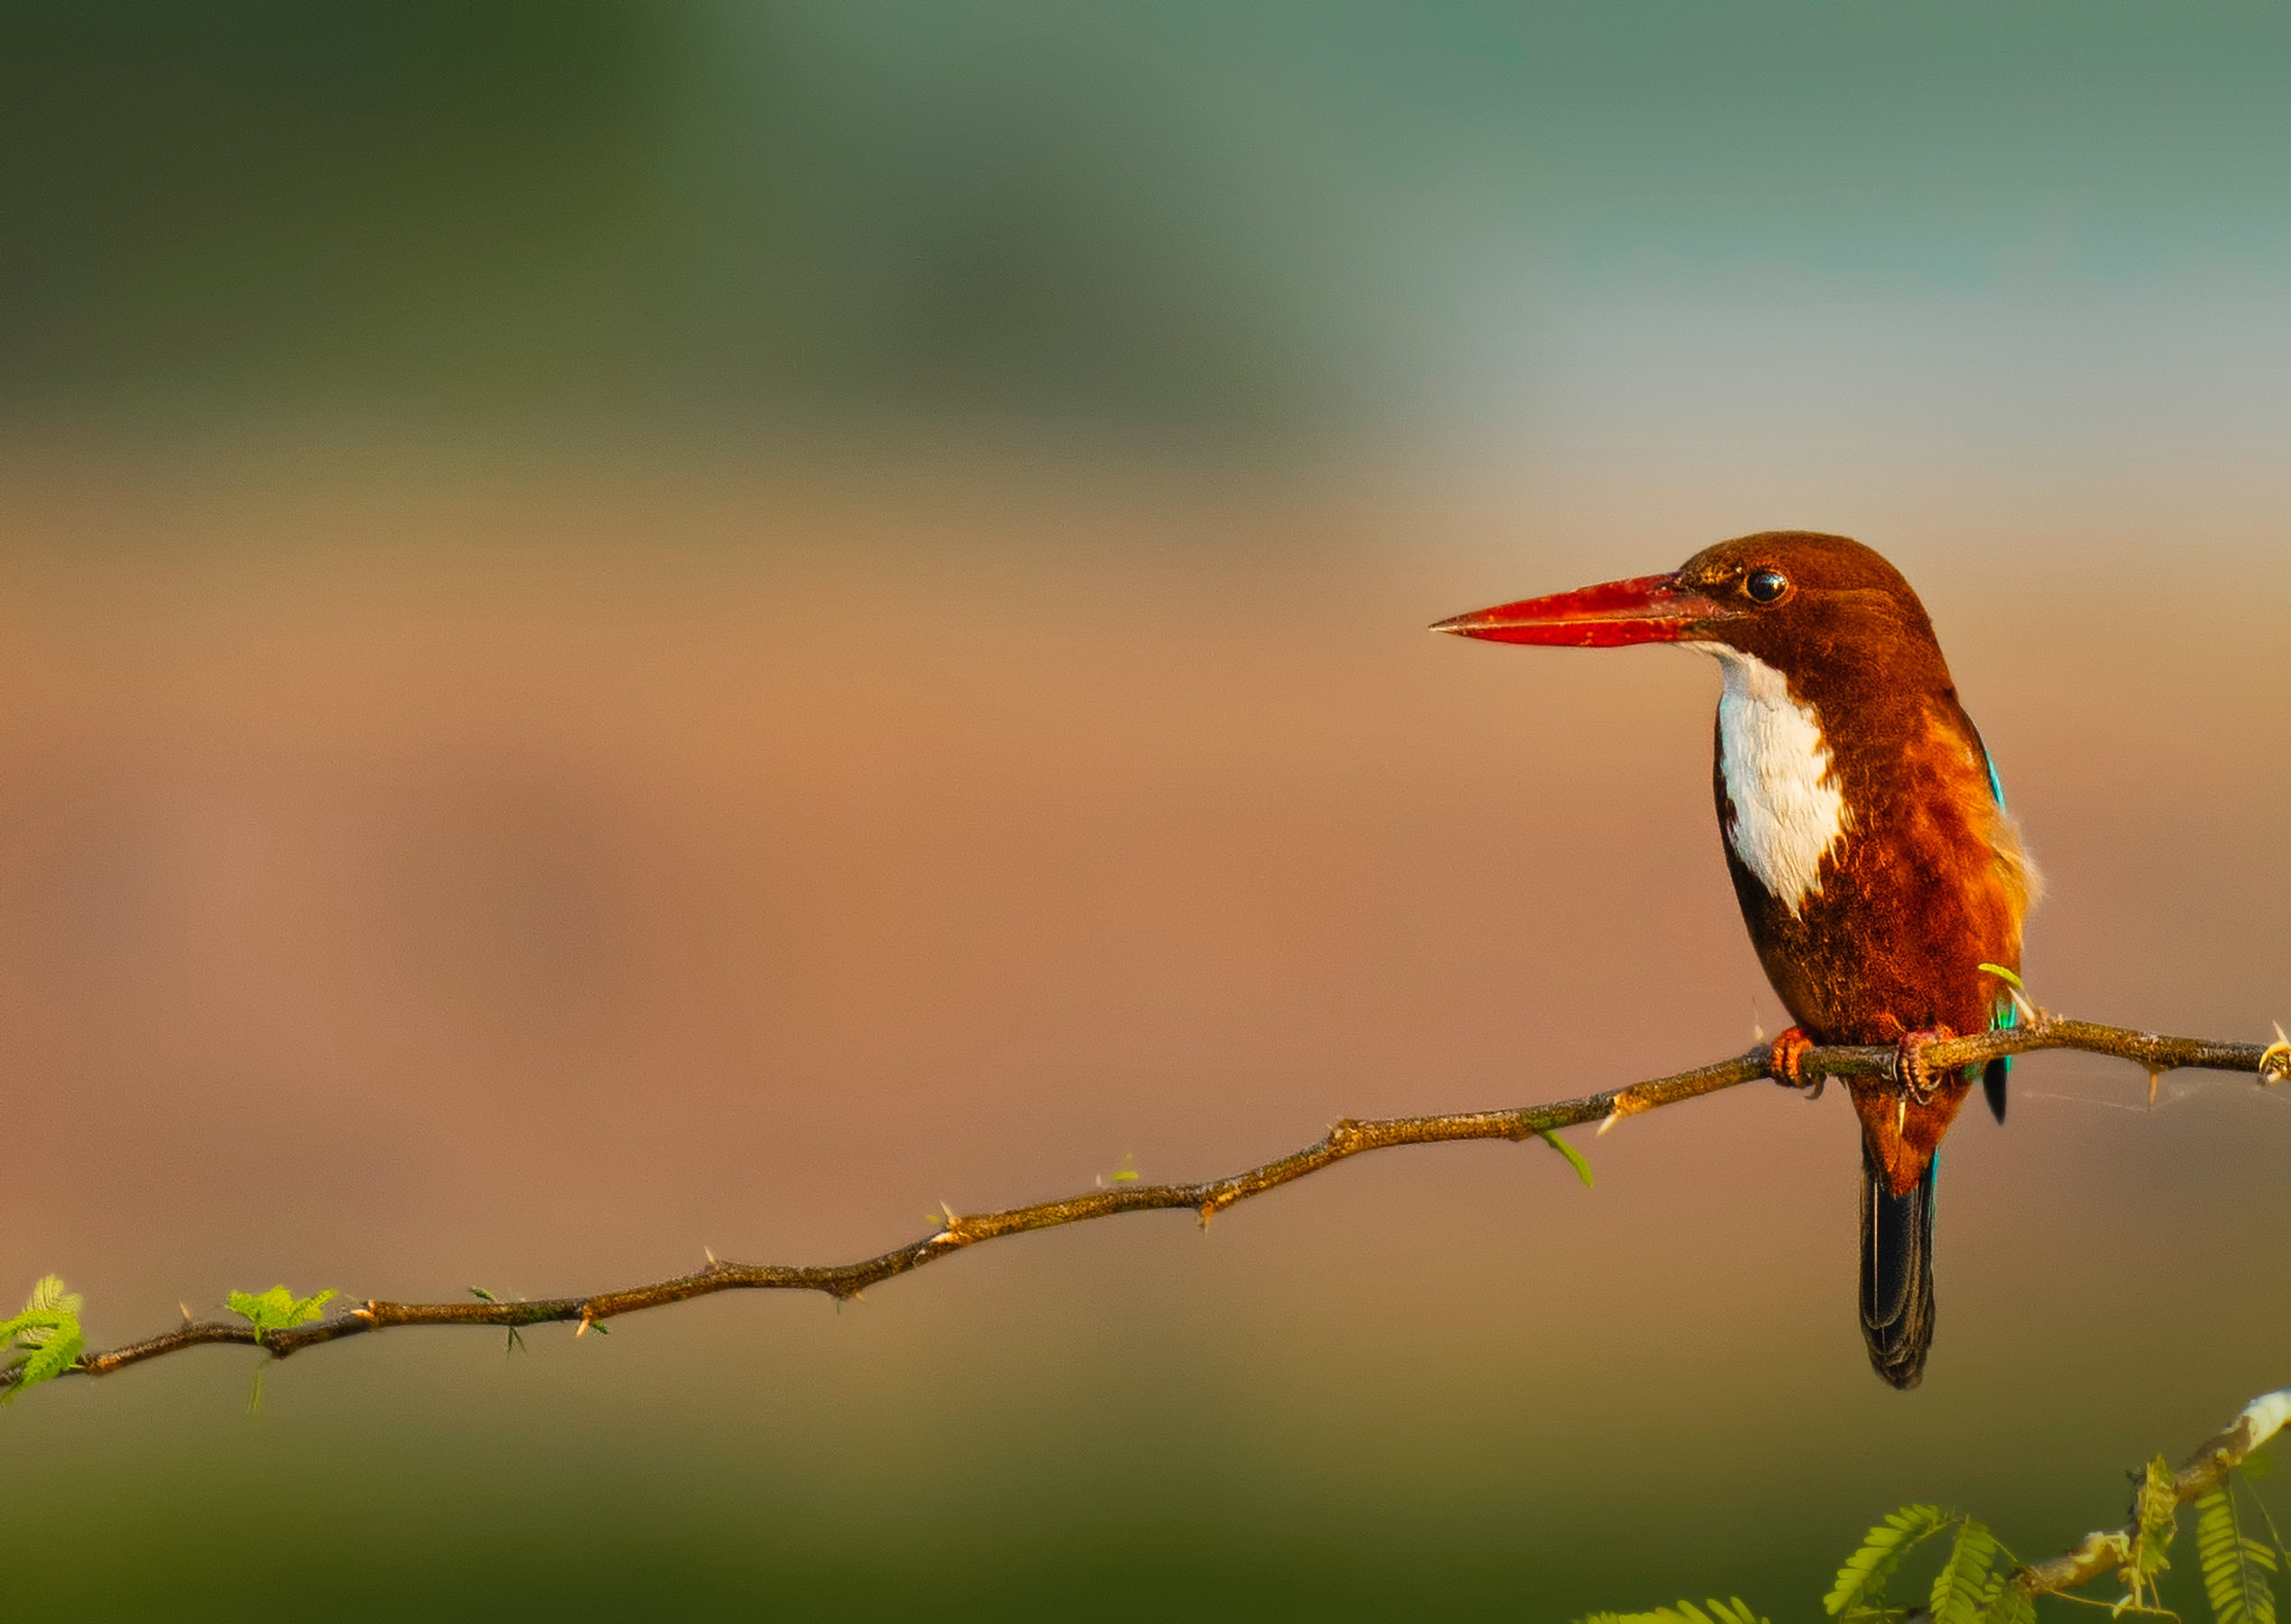 red bird sitting on a branch | bird watching lone tree